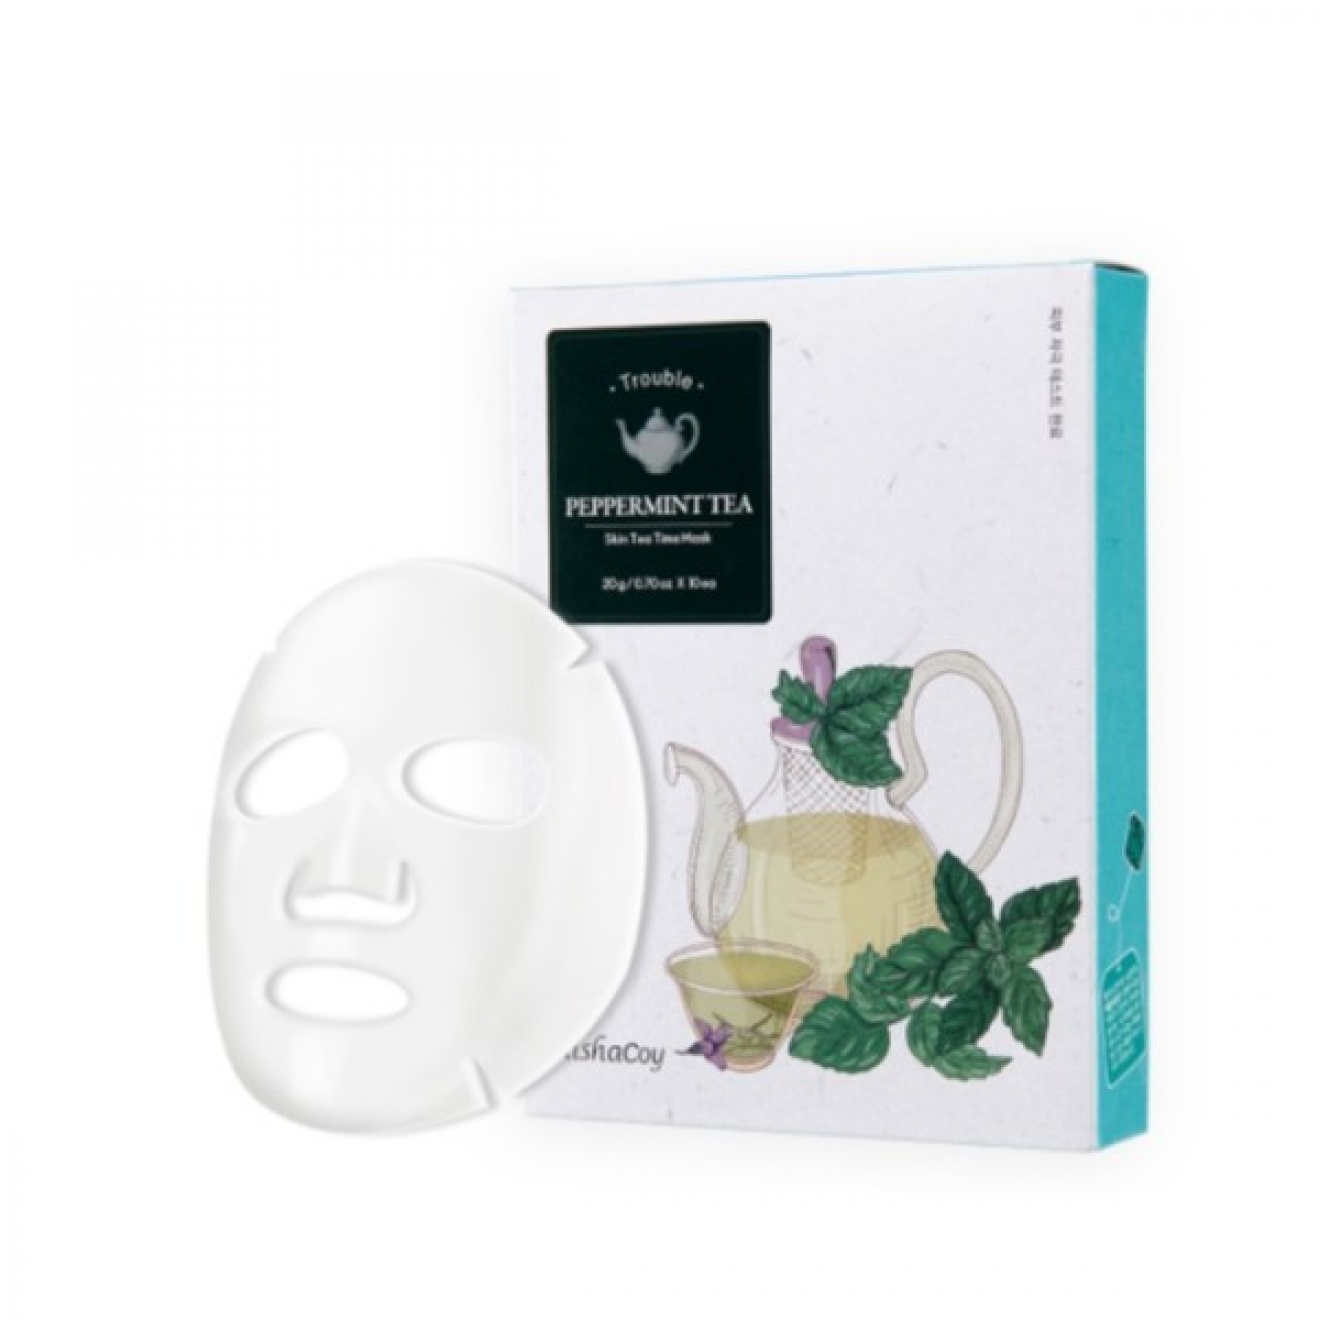 ElishaCoy, Trouble Peppermint Tea Skin Tea Time Mask, 20 g